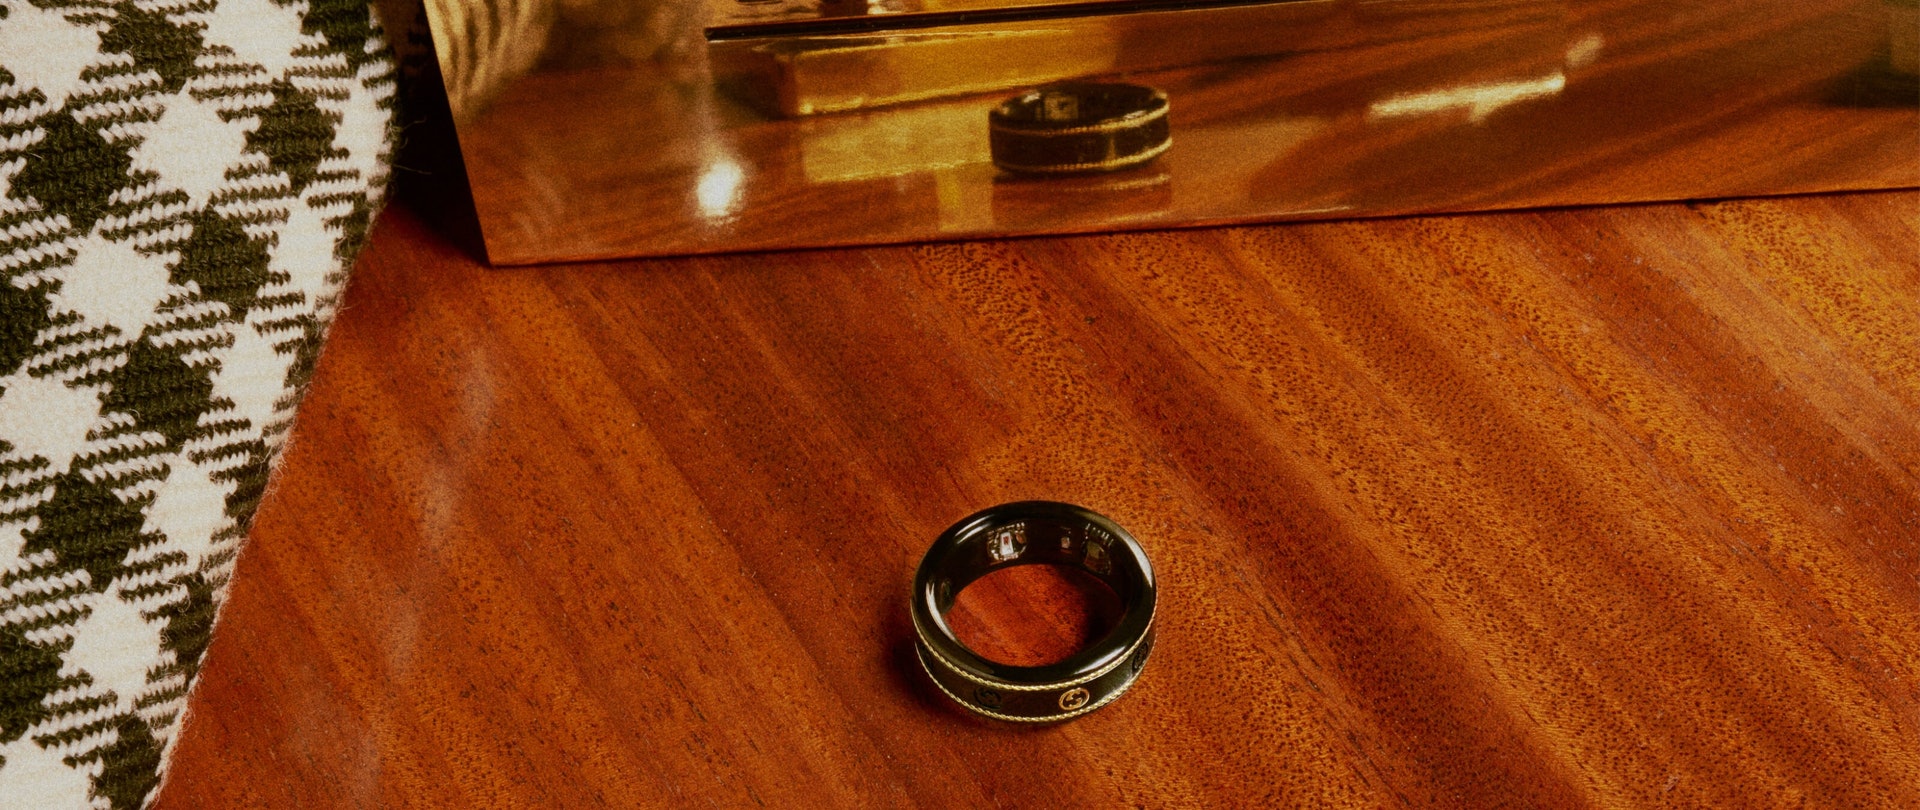 Gucci x Oura 智能戒指外形與 Gucci 旗下的黑金色招牌戒指出品 Icon Ring 非常相似，同樣是以黑色合成剛玉作為基礎素材，另外再在外邊加上 18k 黃金商標及編織裝飾。